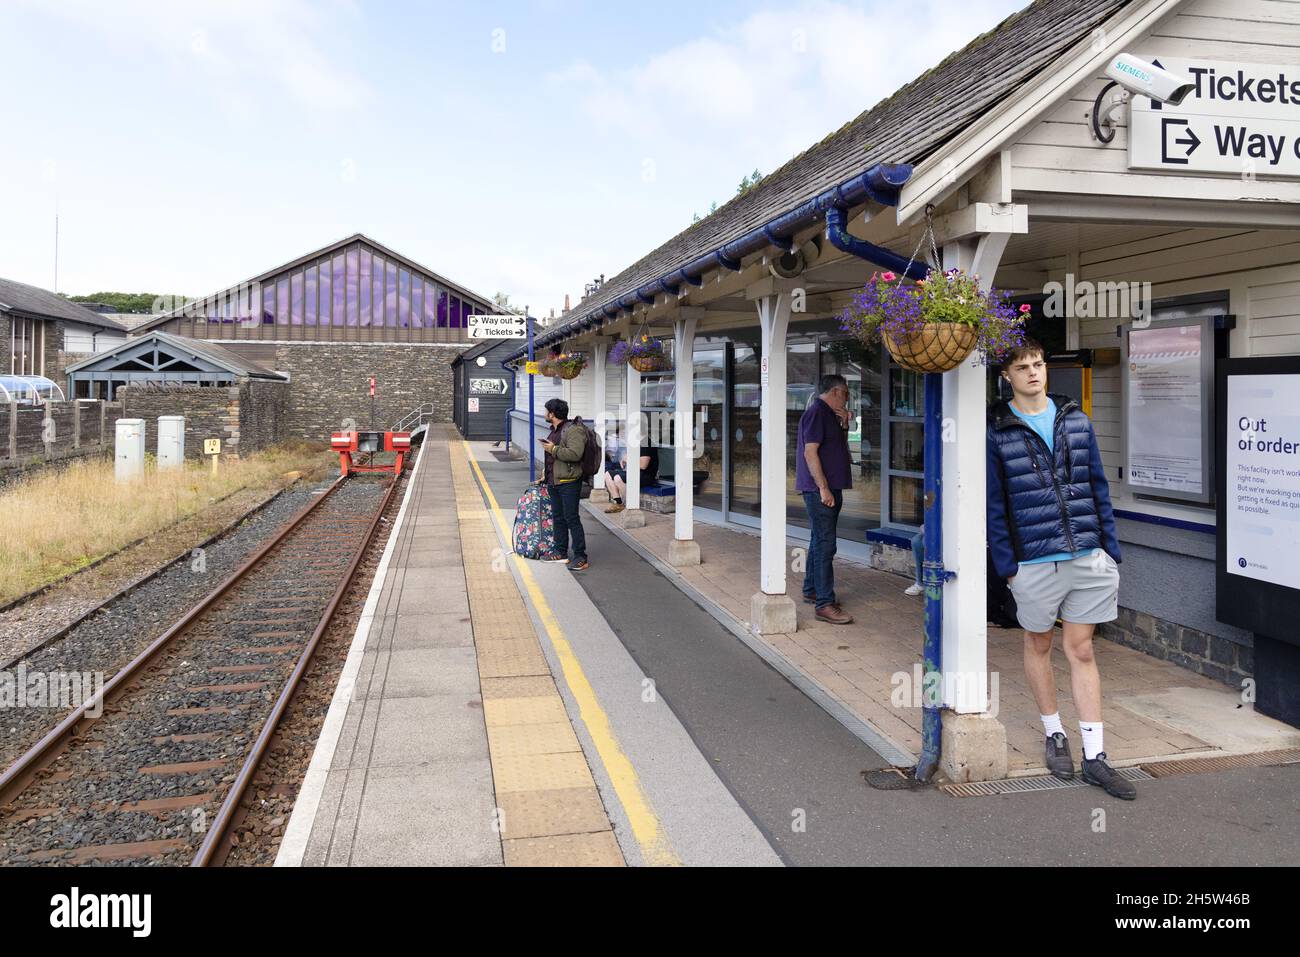 Bahnhof Windermere, Windermere Lake District Cumbria UK - Konzept - Endstation, da es sich um eine Endstation handelt. Stockfoto